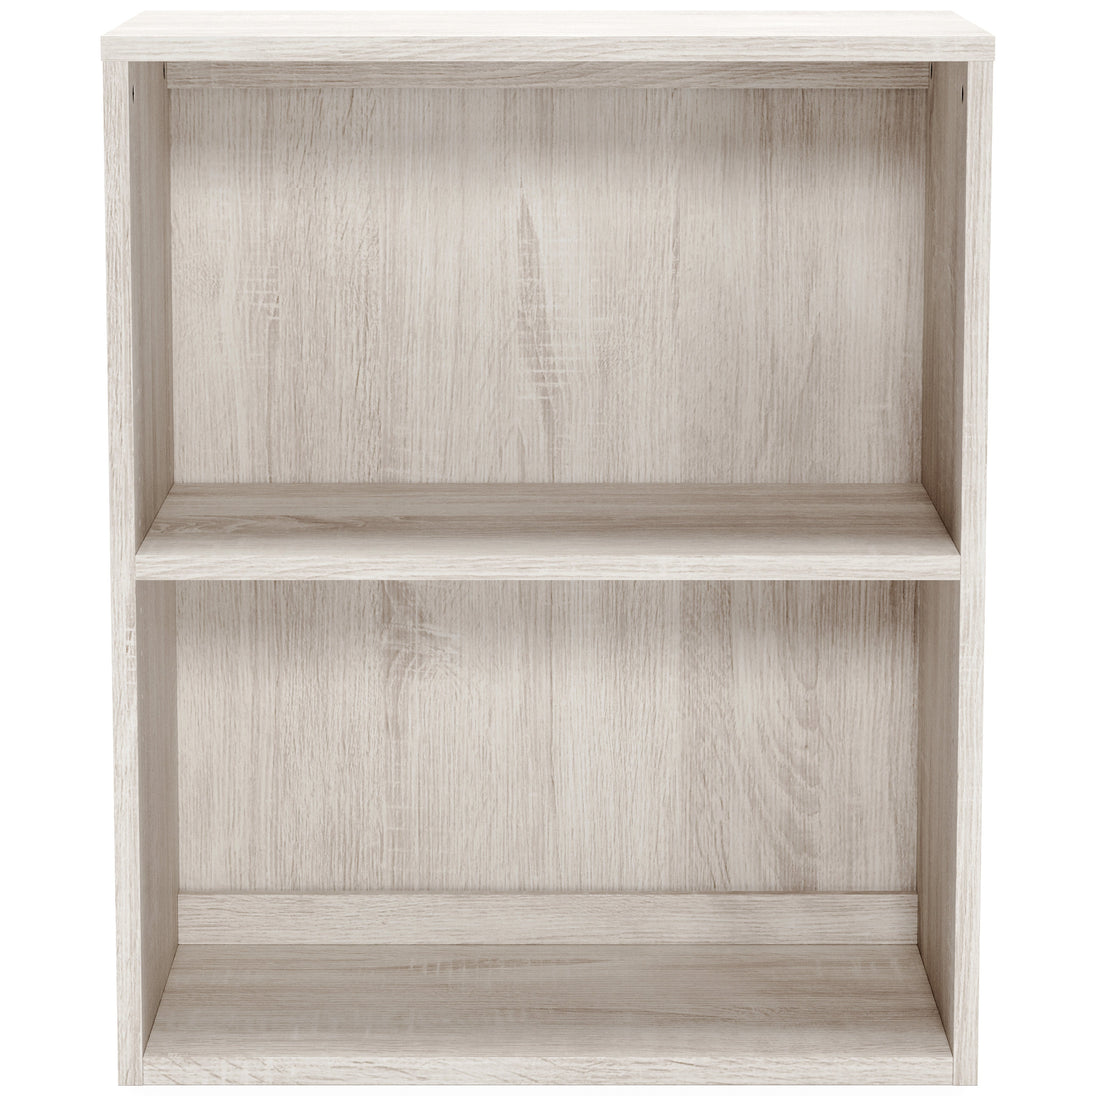 Dorrinson Bookcase - Antique White - Furniture Depot (6747407843501)